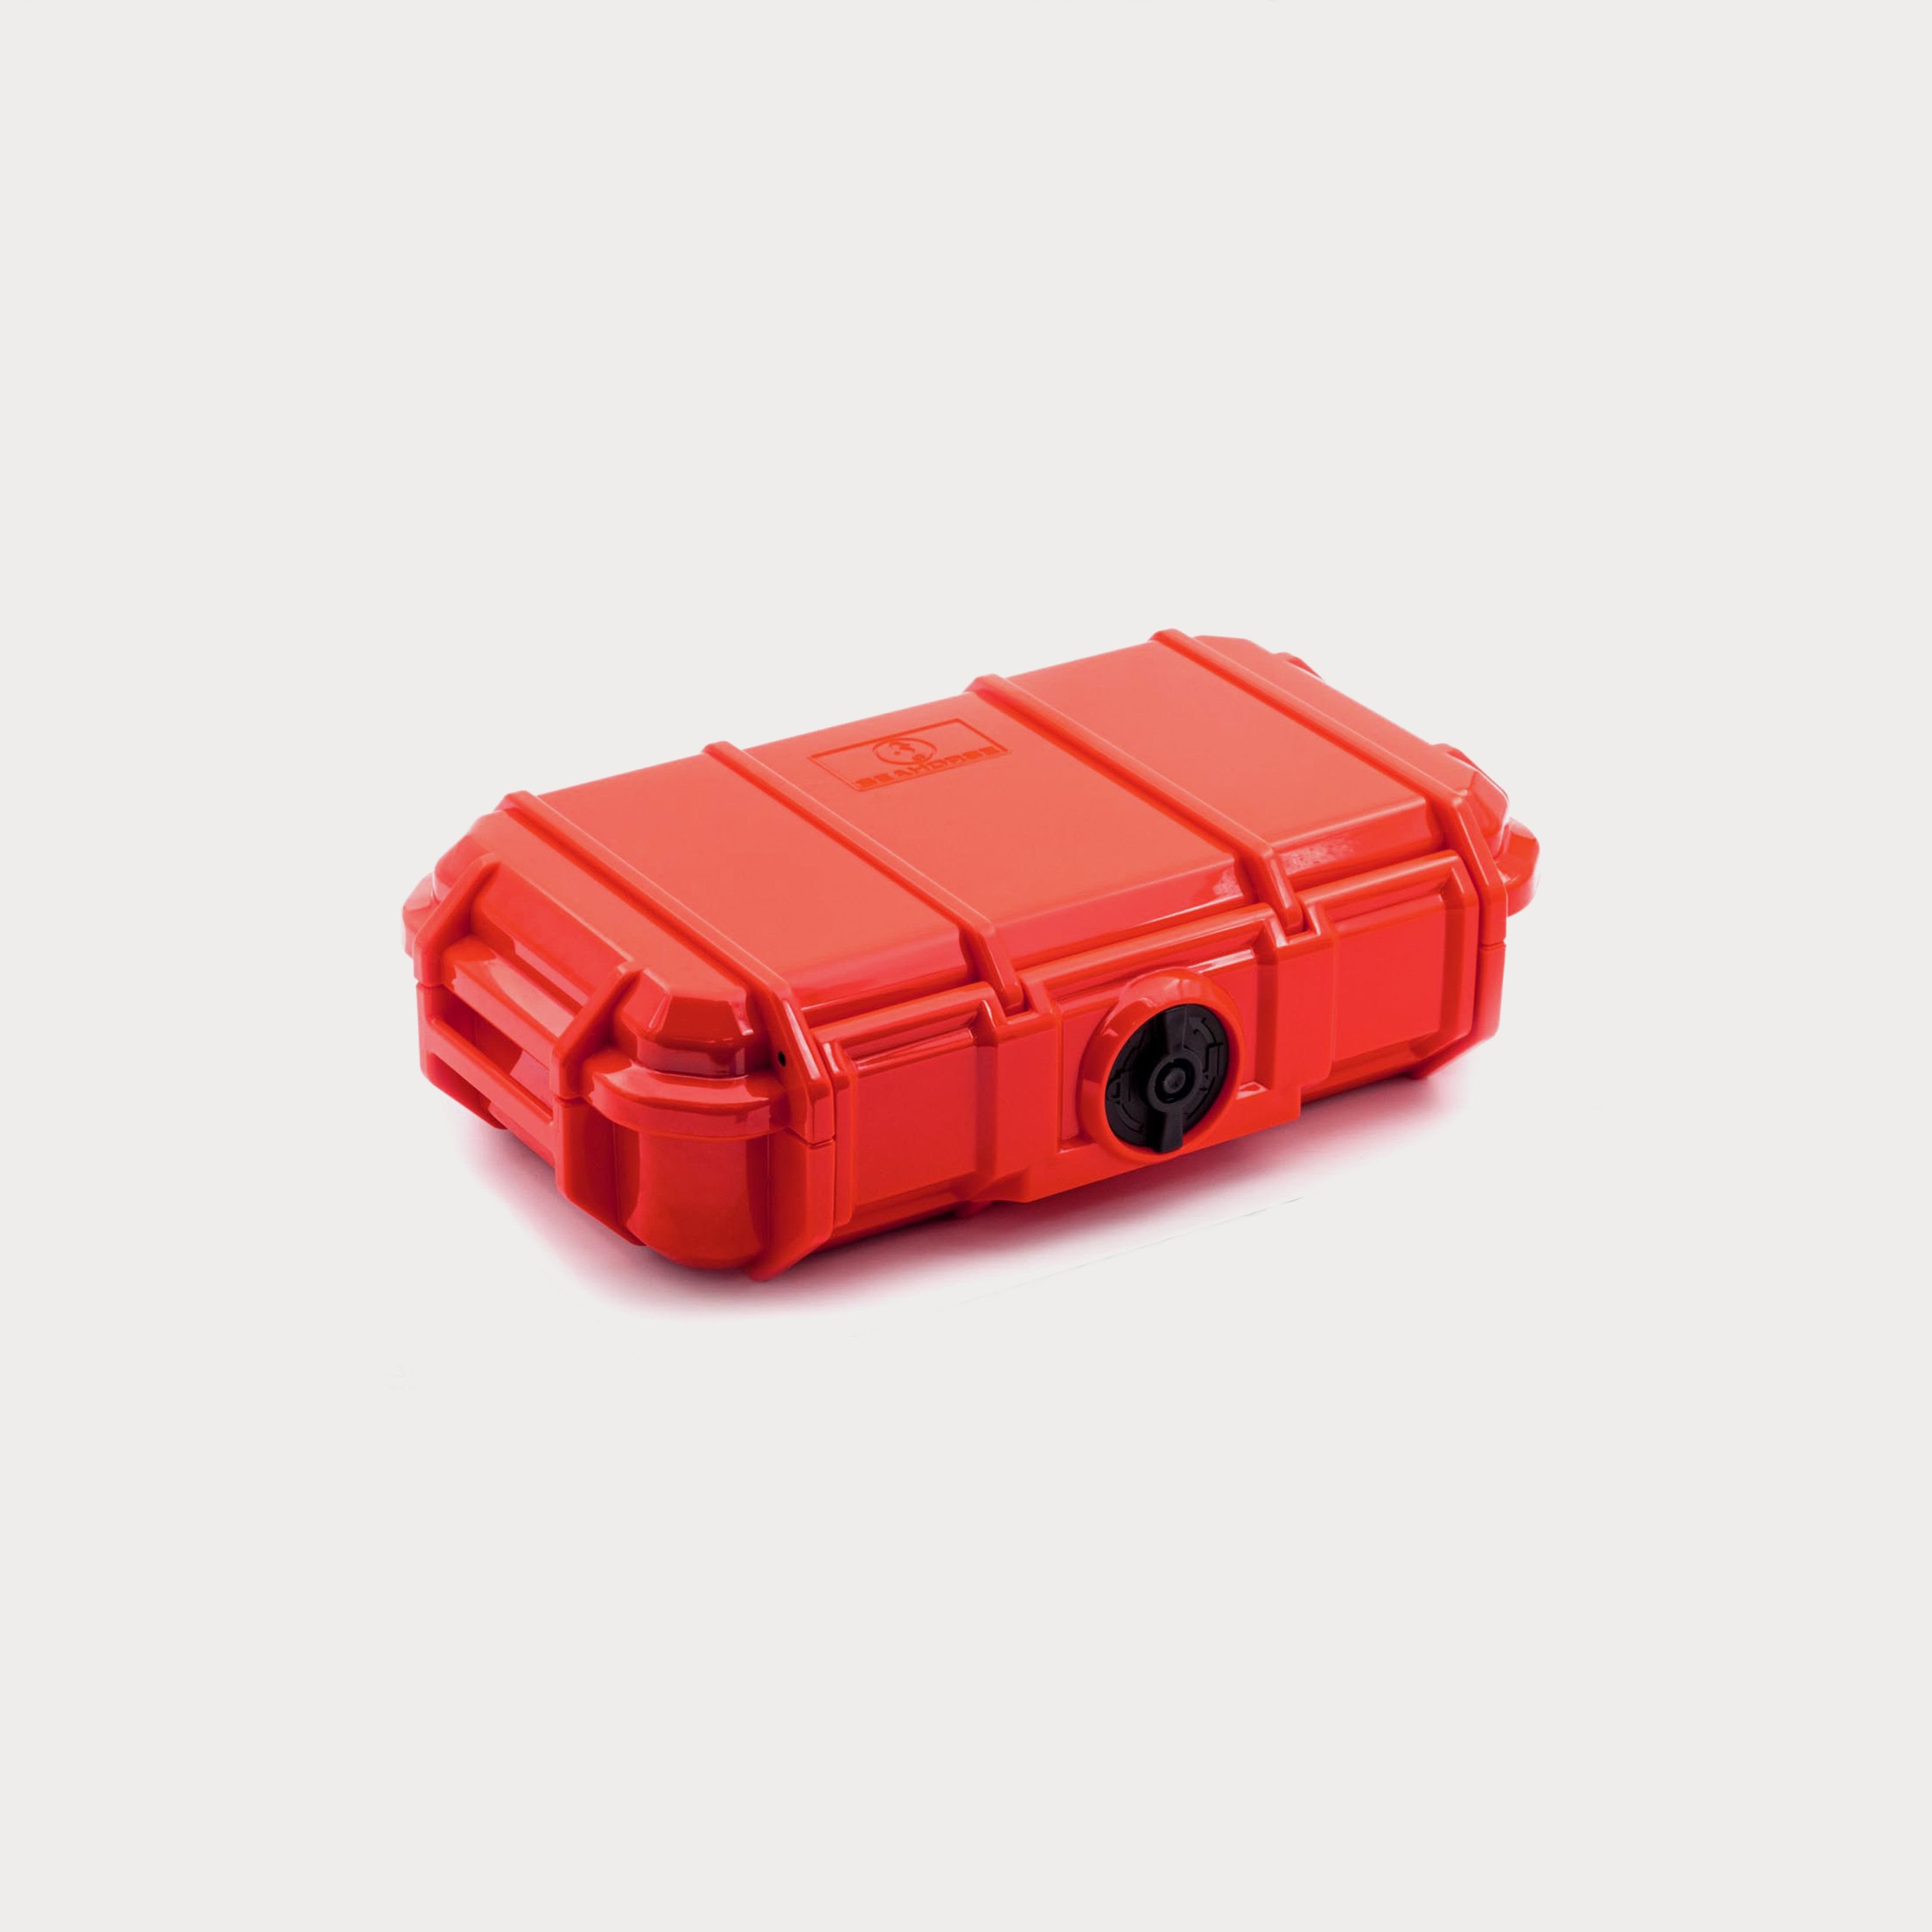 56 Micro Waterproof Camera Case w/ Rubber Insert - Red